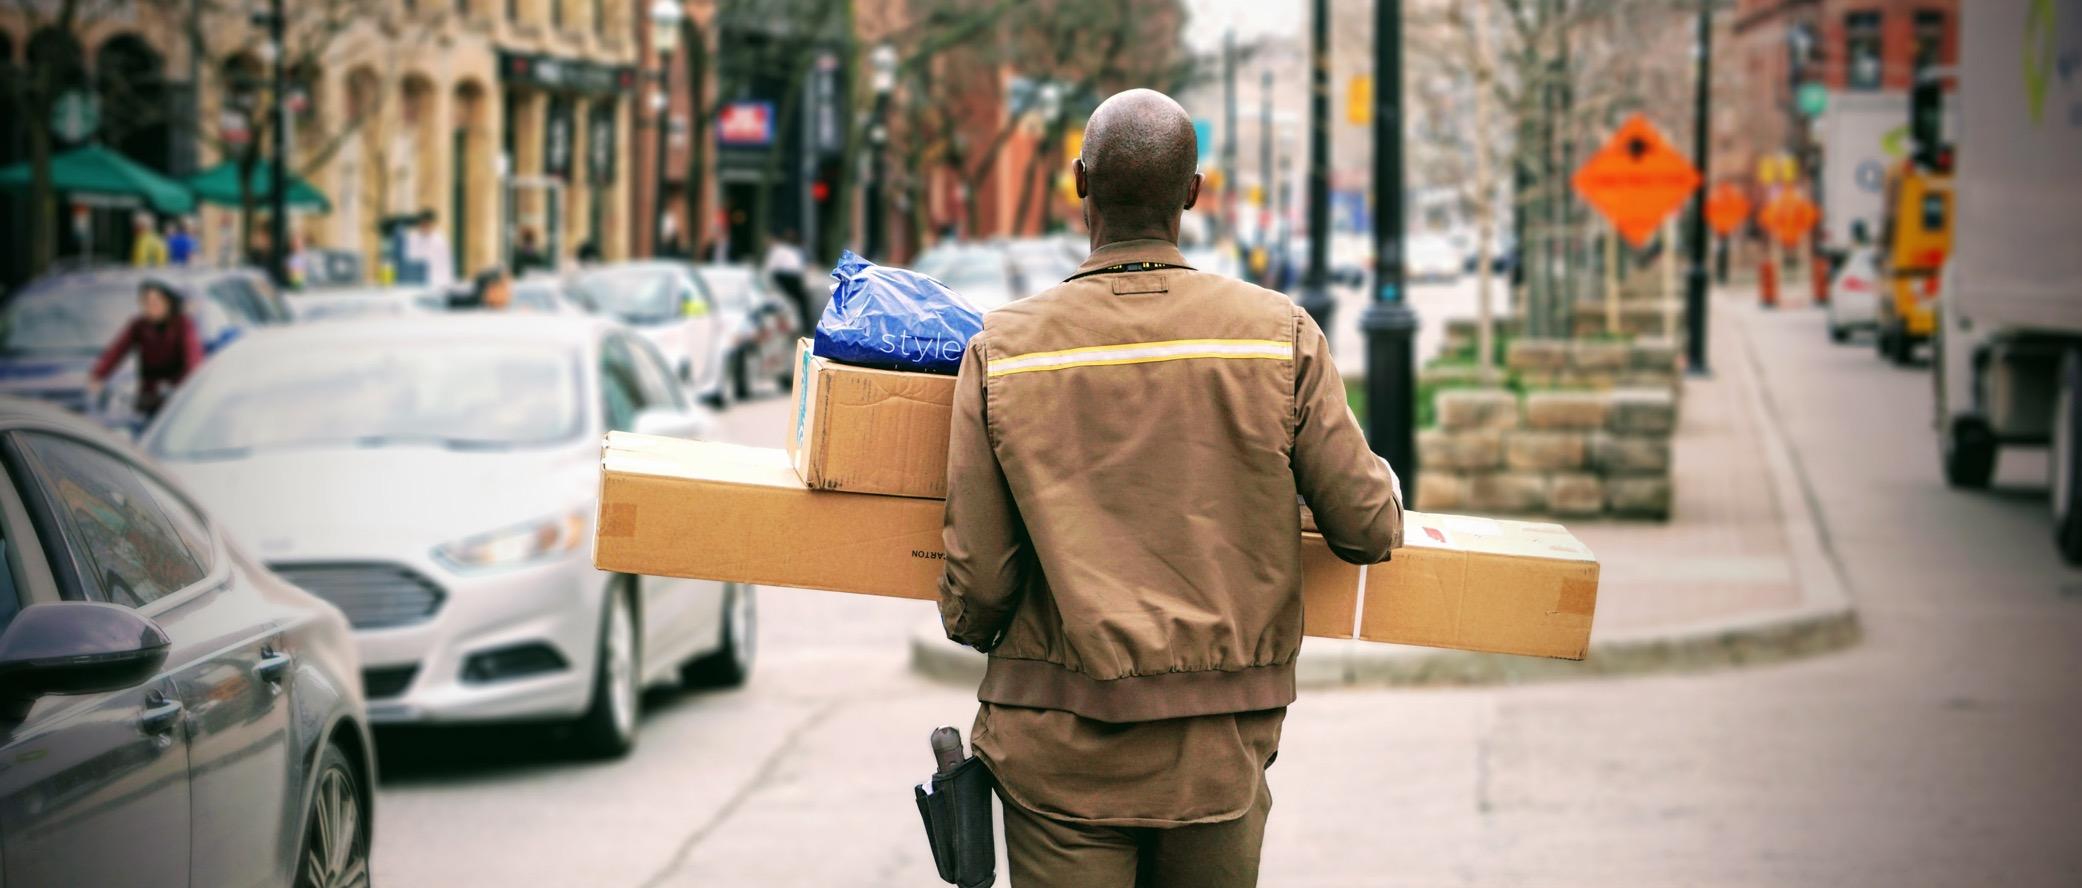 Man delivering boxes to a destination.